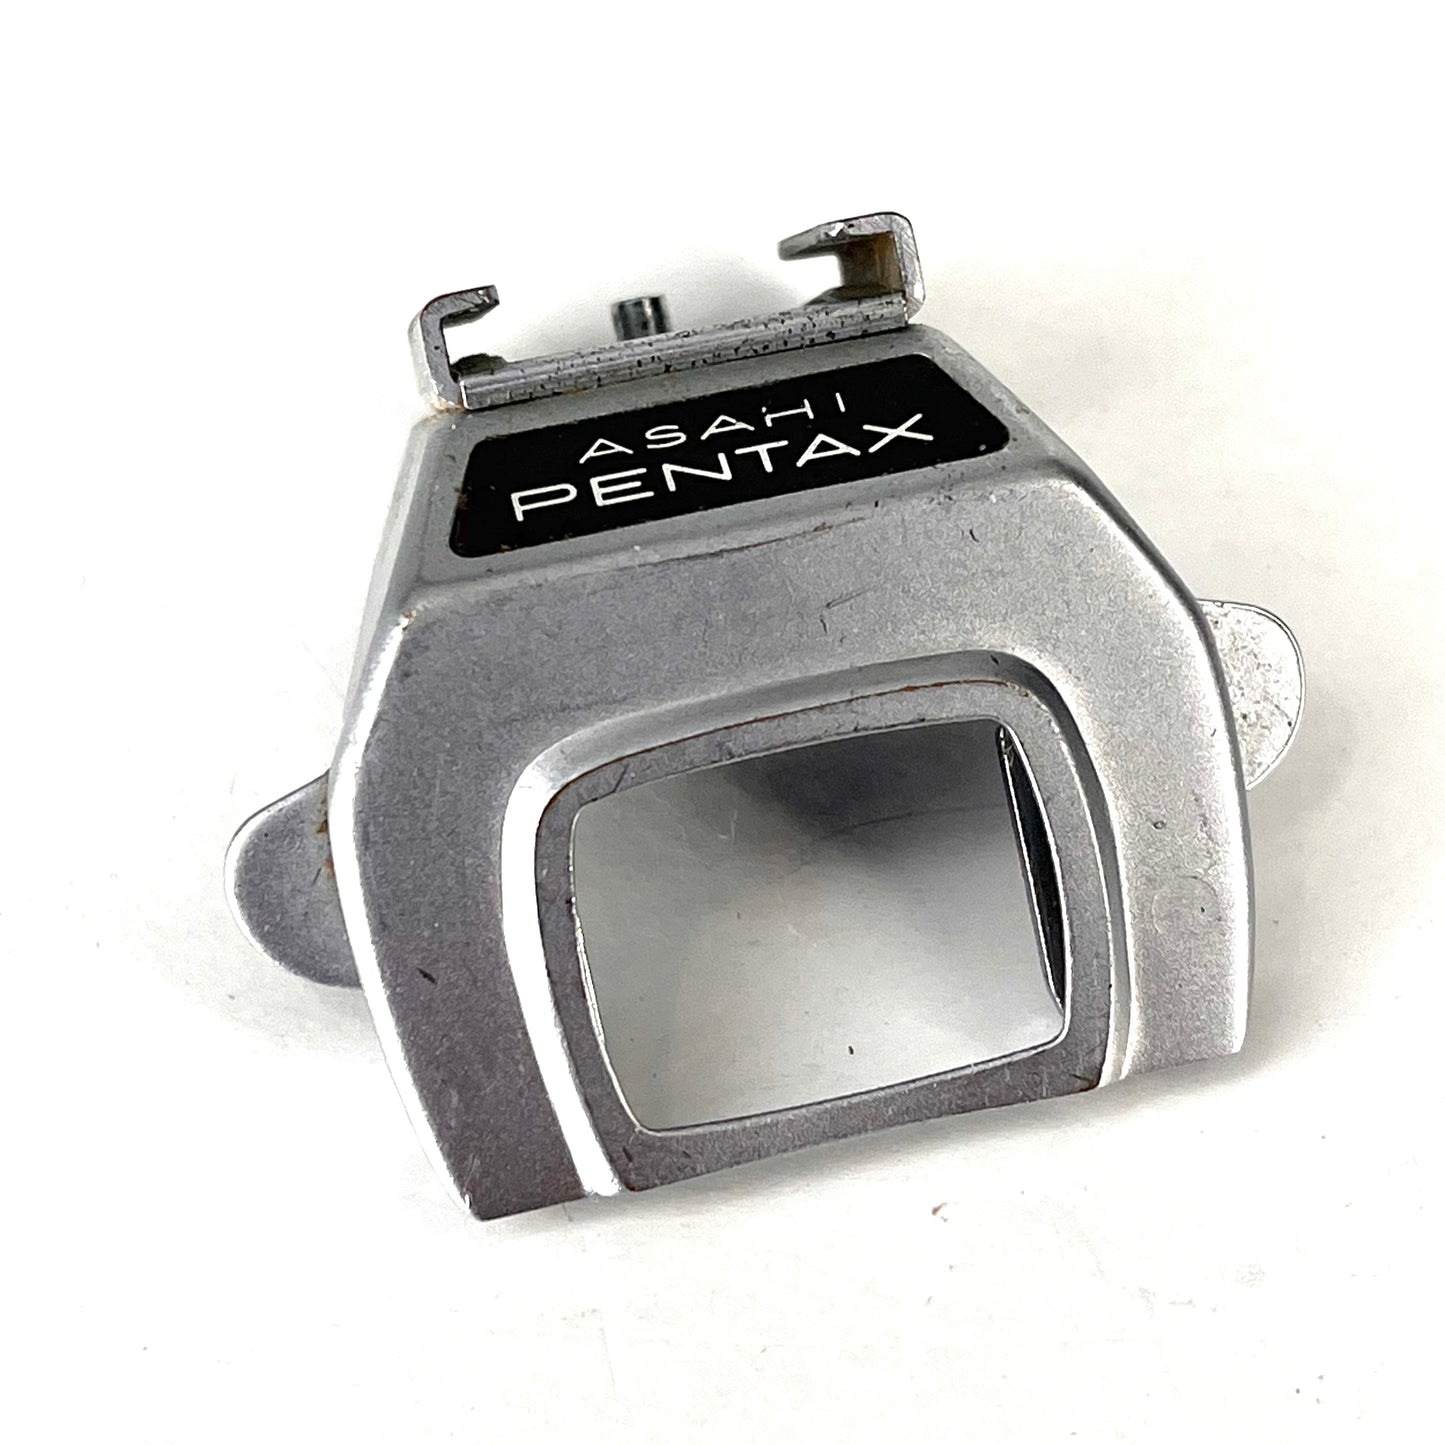 Pentax eyepiece hotshoe adapter